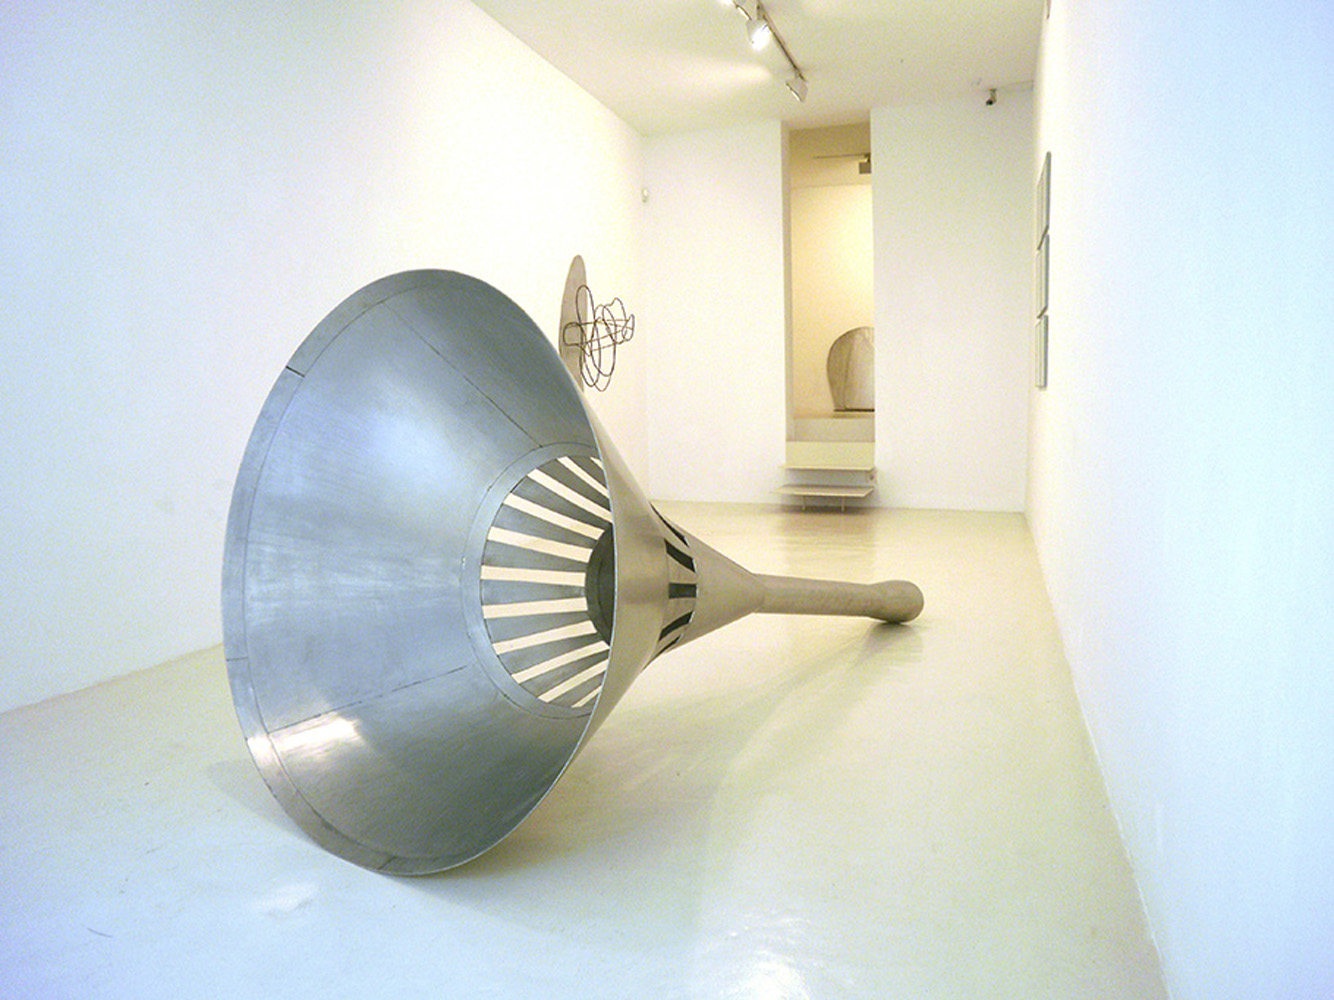 Baalbek III, 2008, acero inoxidable, 139 x 294 x 139 cm. Galeria Maior Palma, 2010